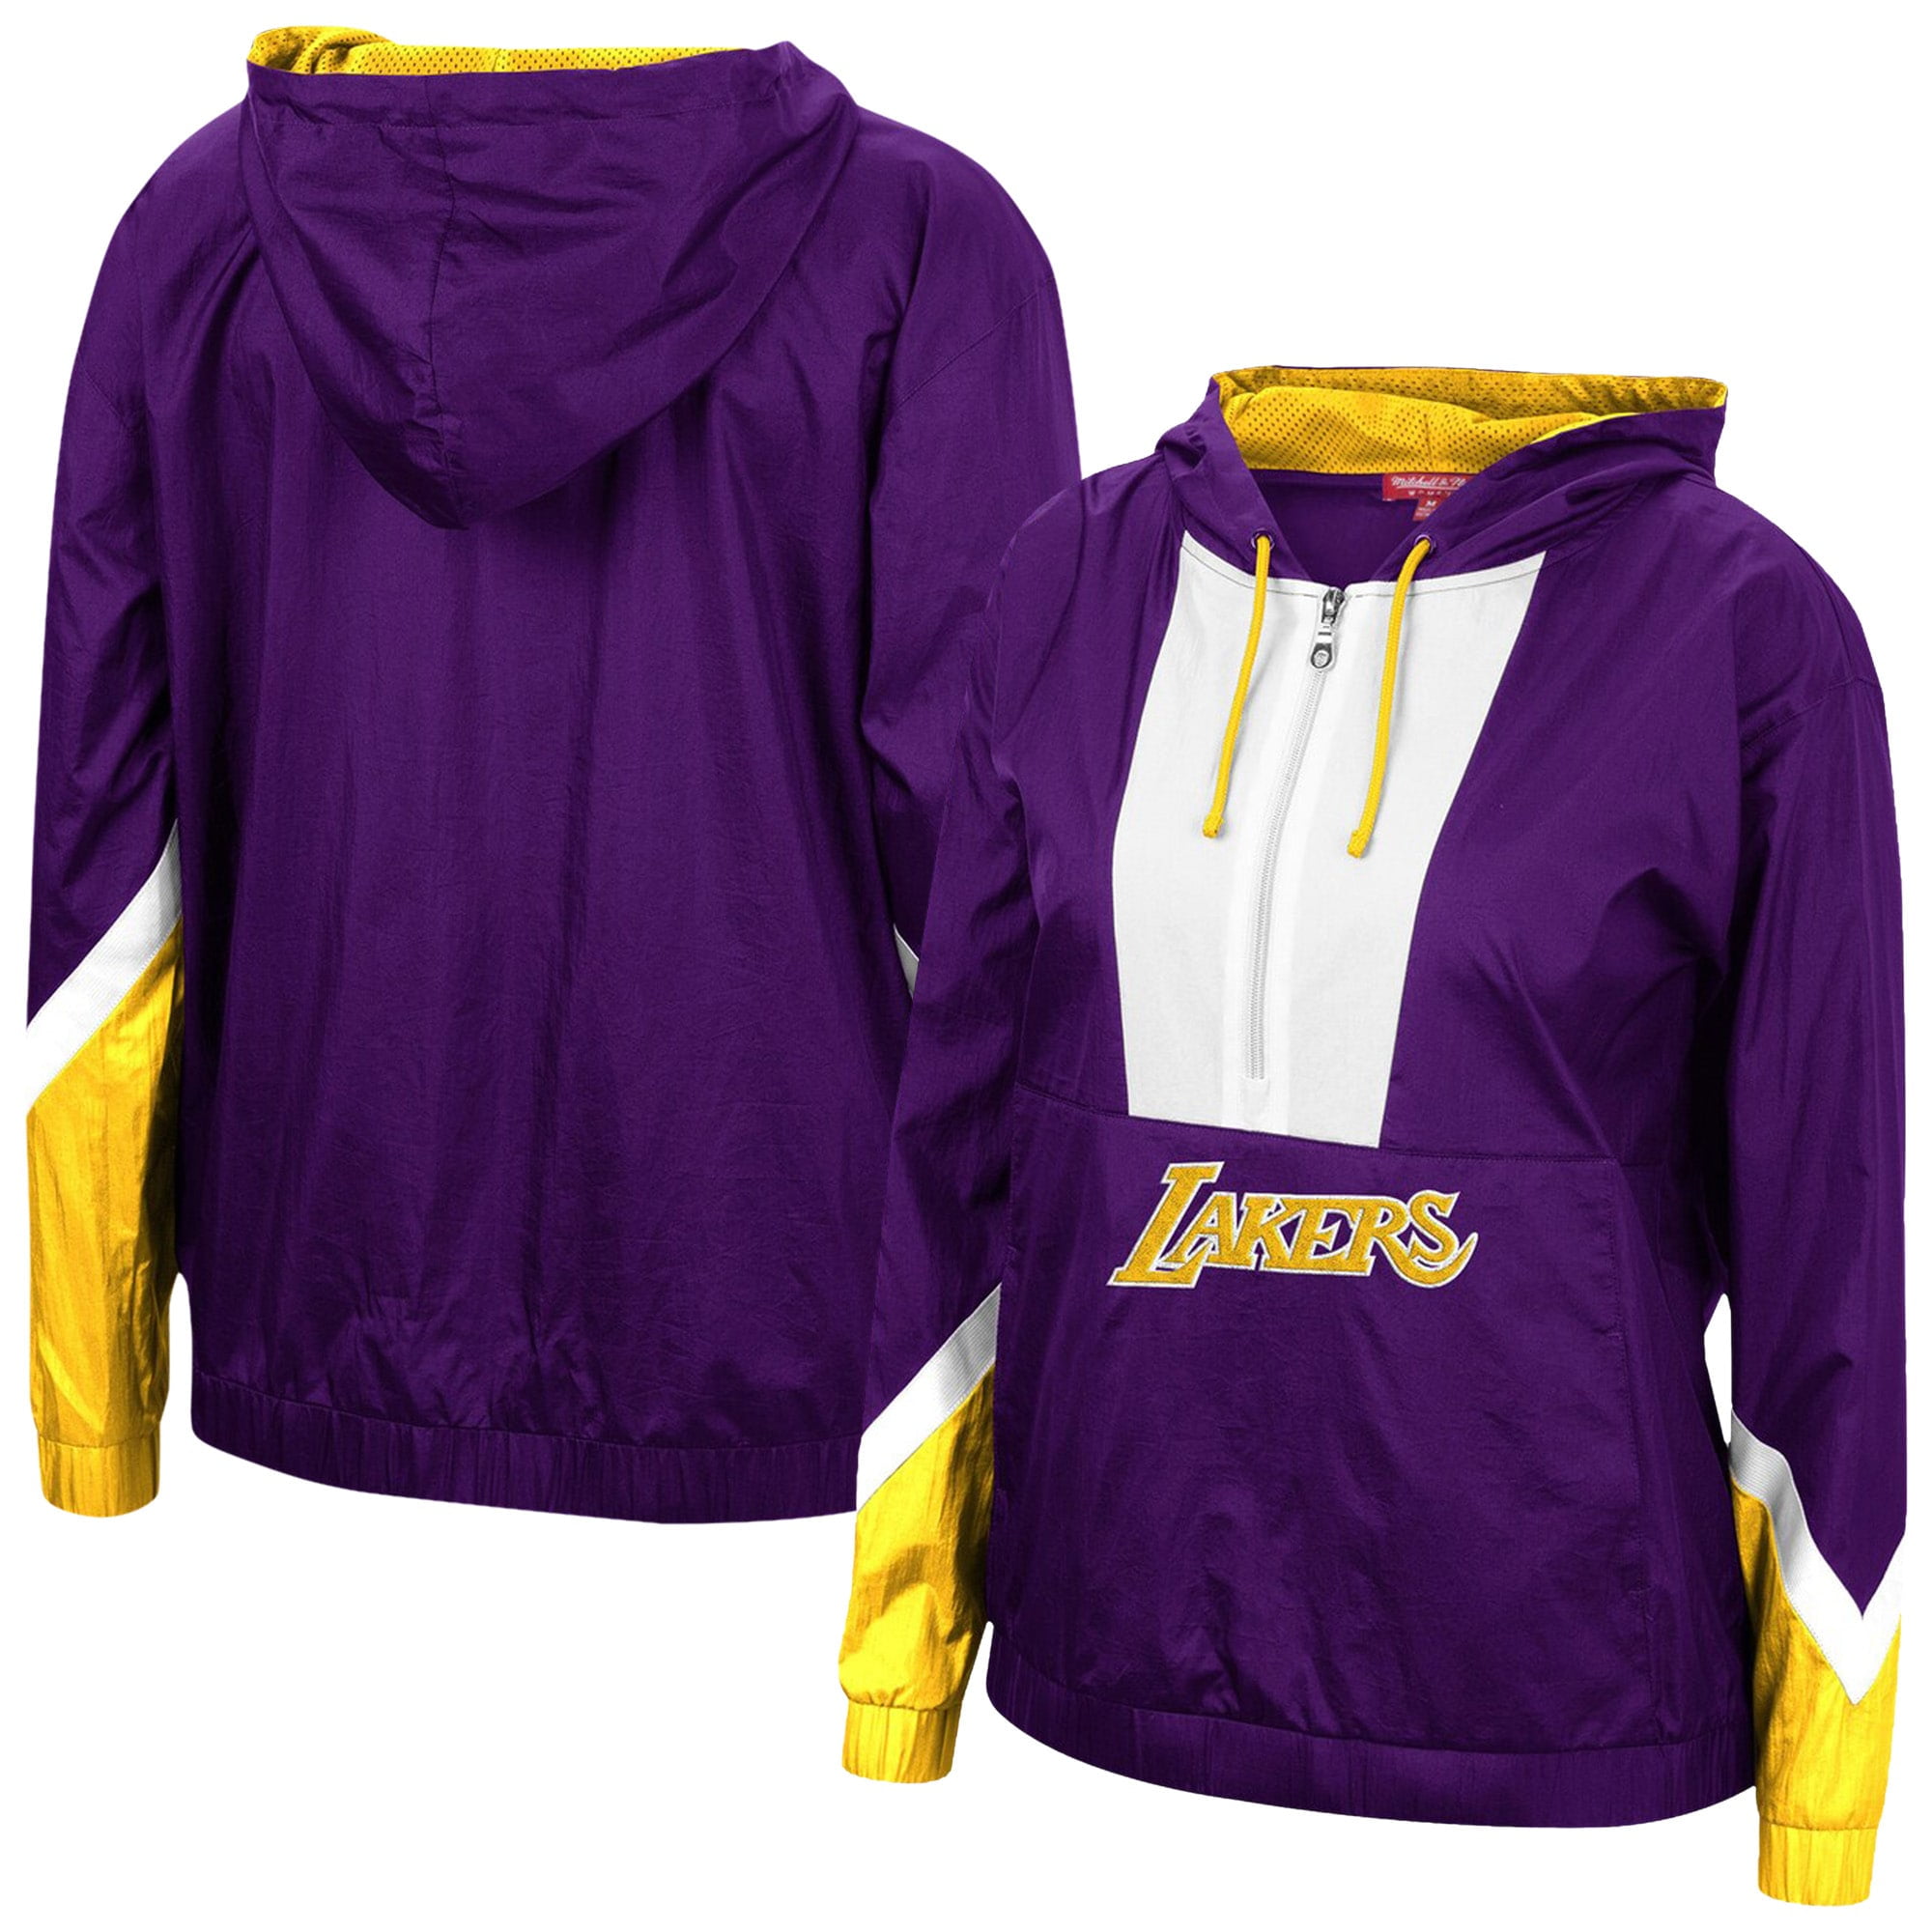 Mitchell & Ness LA Lakers mesh v-neck t-shirt in purple